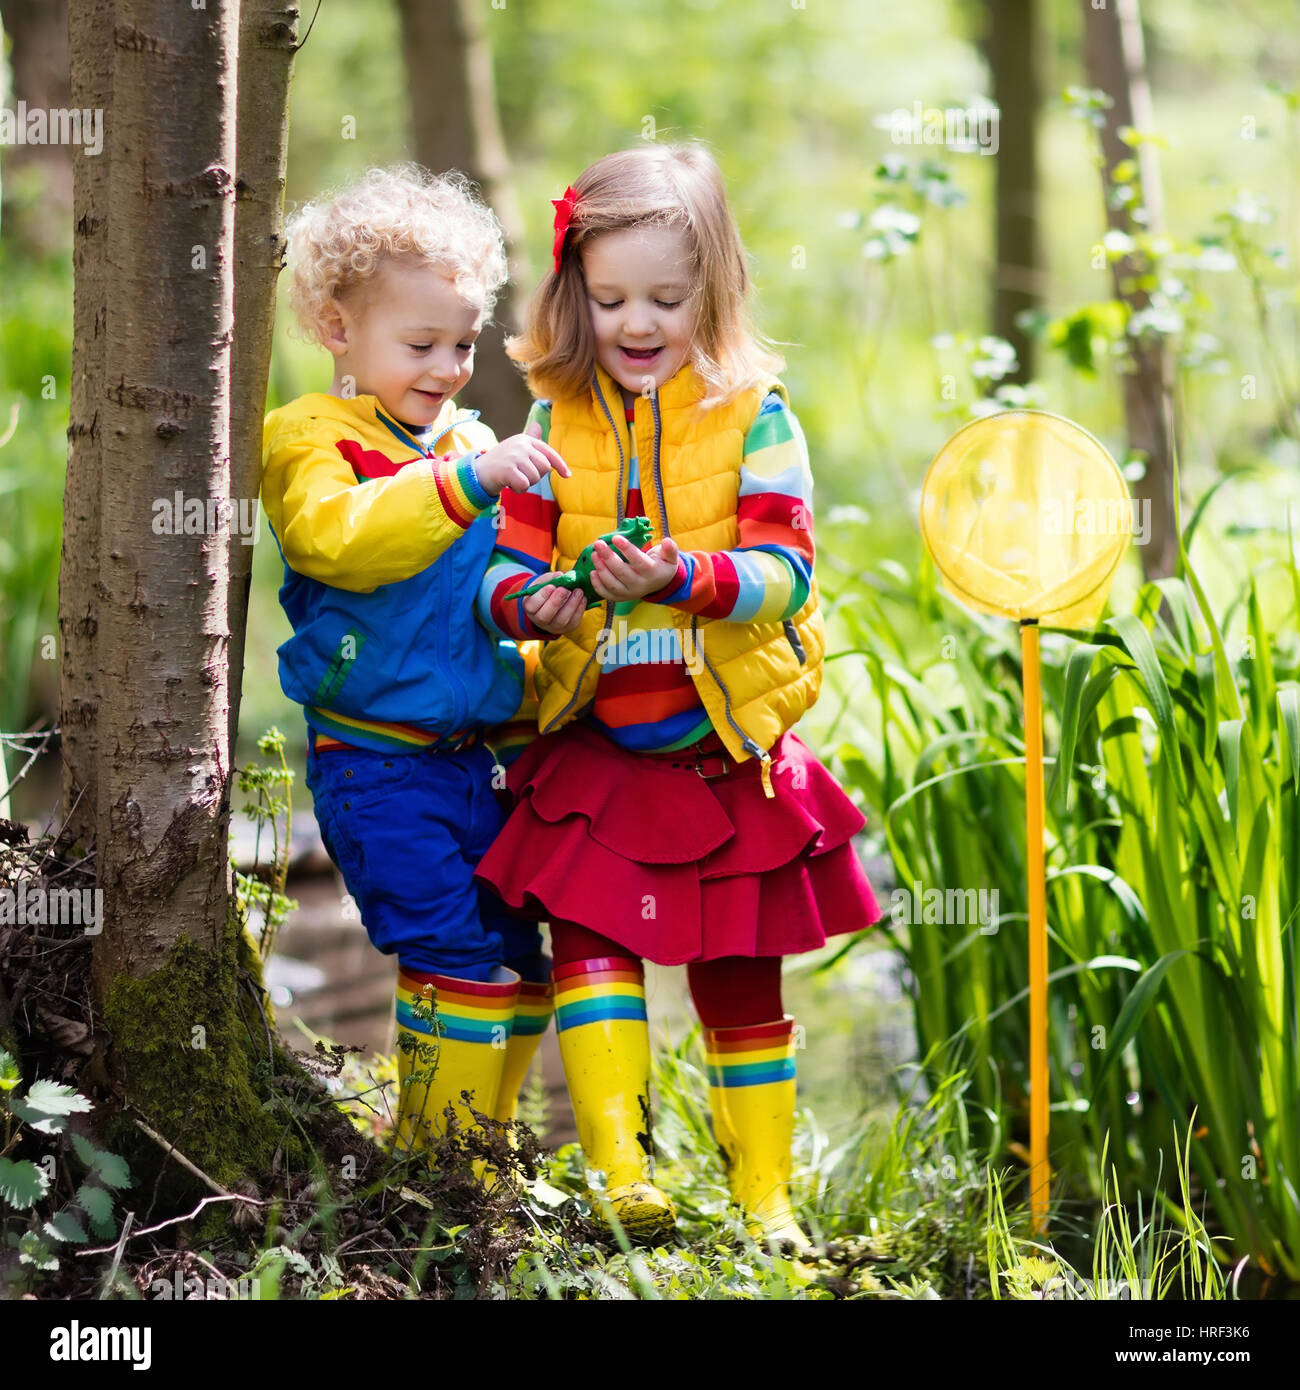 https://c8.alamy.com/comp/HRF3K6/children-playing-outdoors-preschool-kids-catching-frog-with-net-boy-HRF3K6.jpg